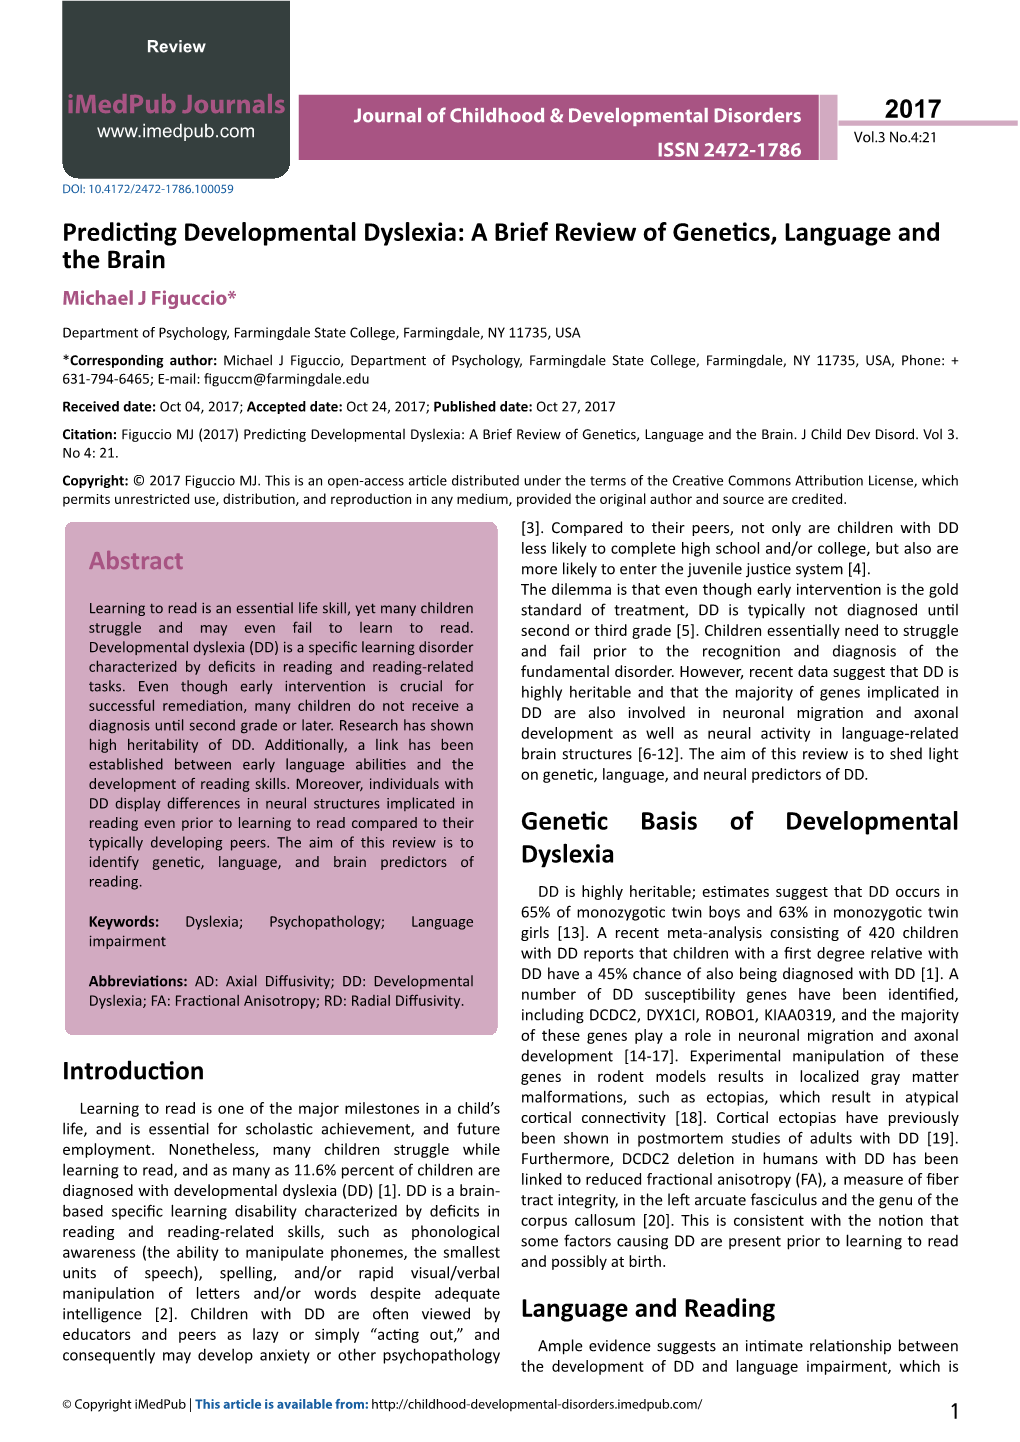 Predicting Developmental Dyslexia: a Brief Review of Genetics, Language and the Brain Michael J Figuccio*